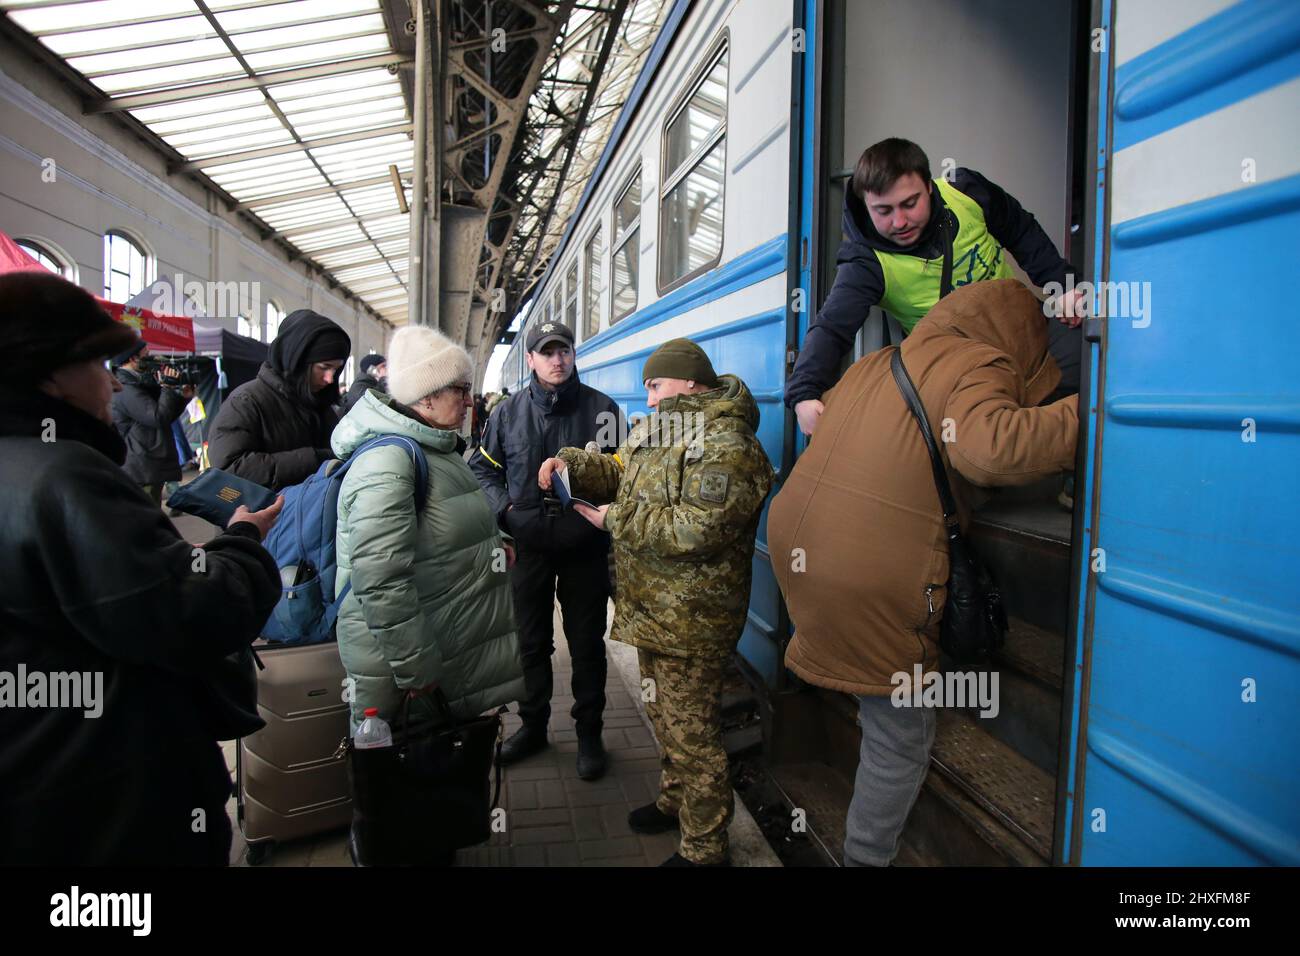 LVIV, UKRAINE - MARCH 11, 2022 - People fleeing the Russian invasion await an evacuation train to Przemysl, Poland, at the main railway station in Lvi Stock Photo